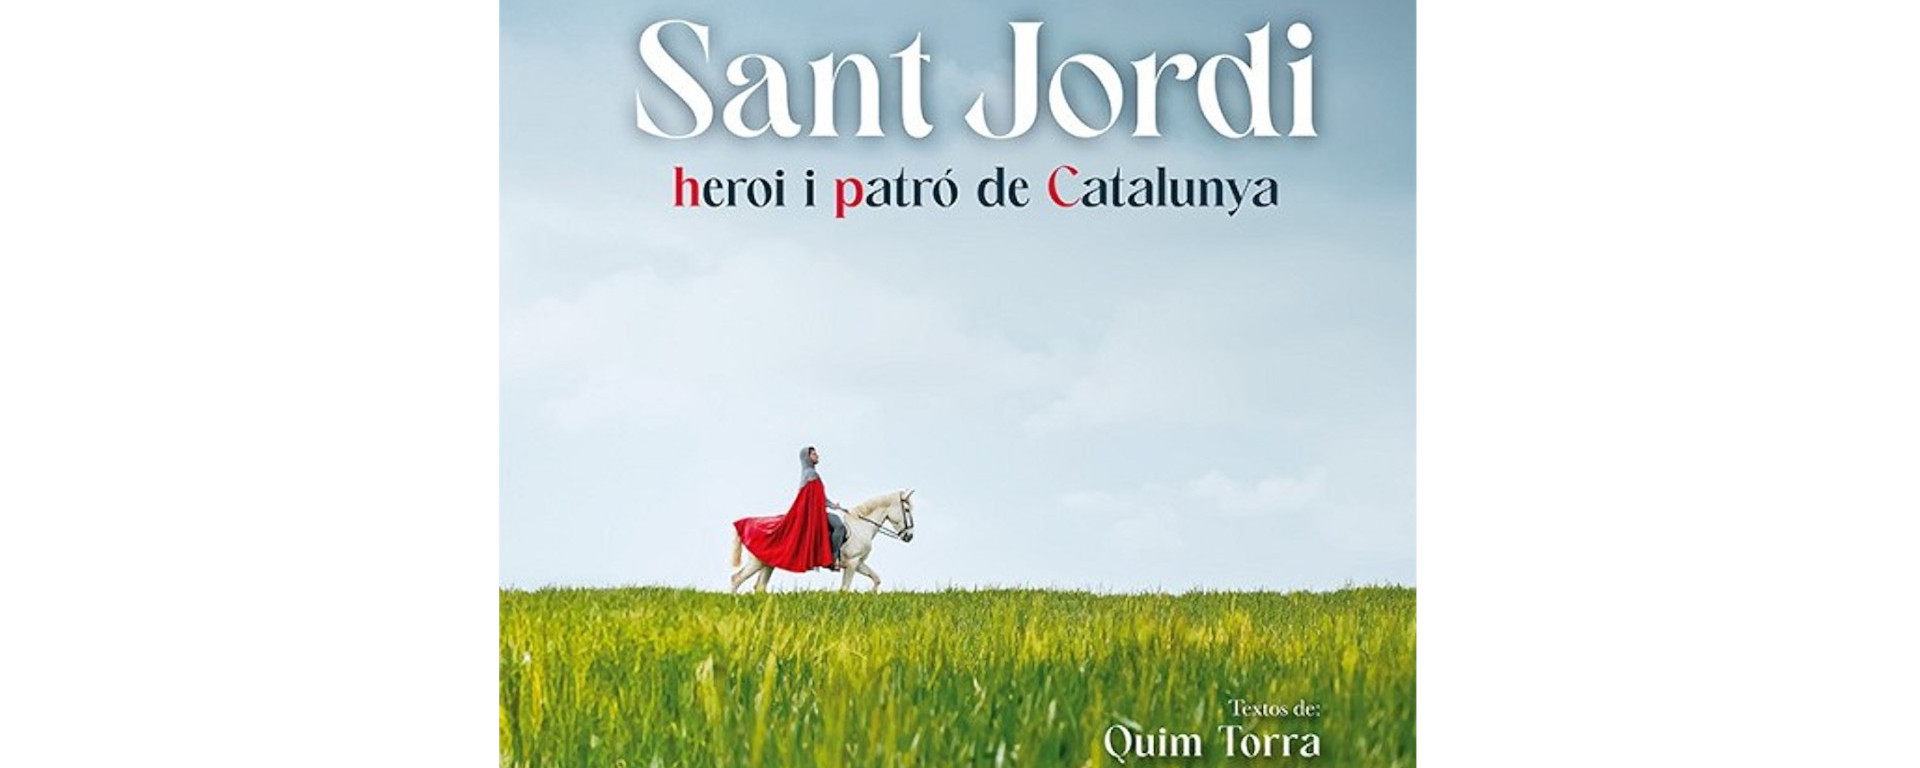 sant-jordi-llibre-quim-torra